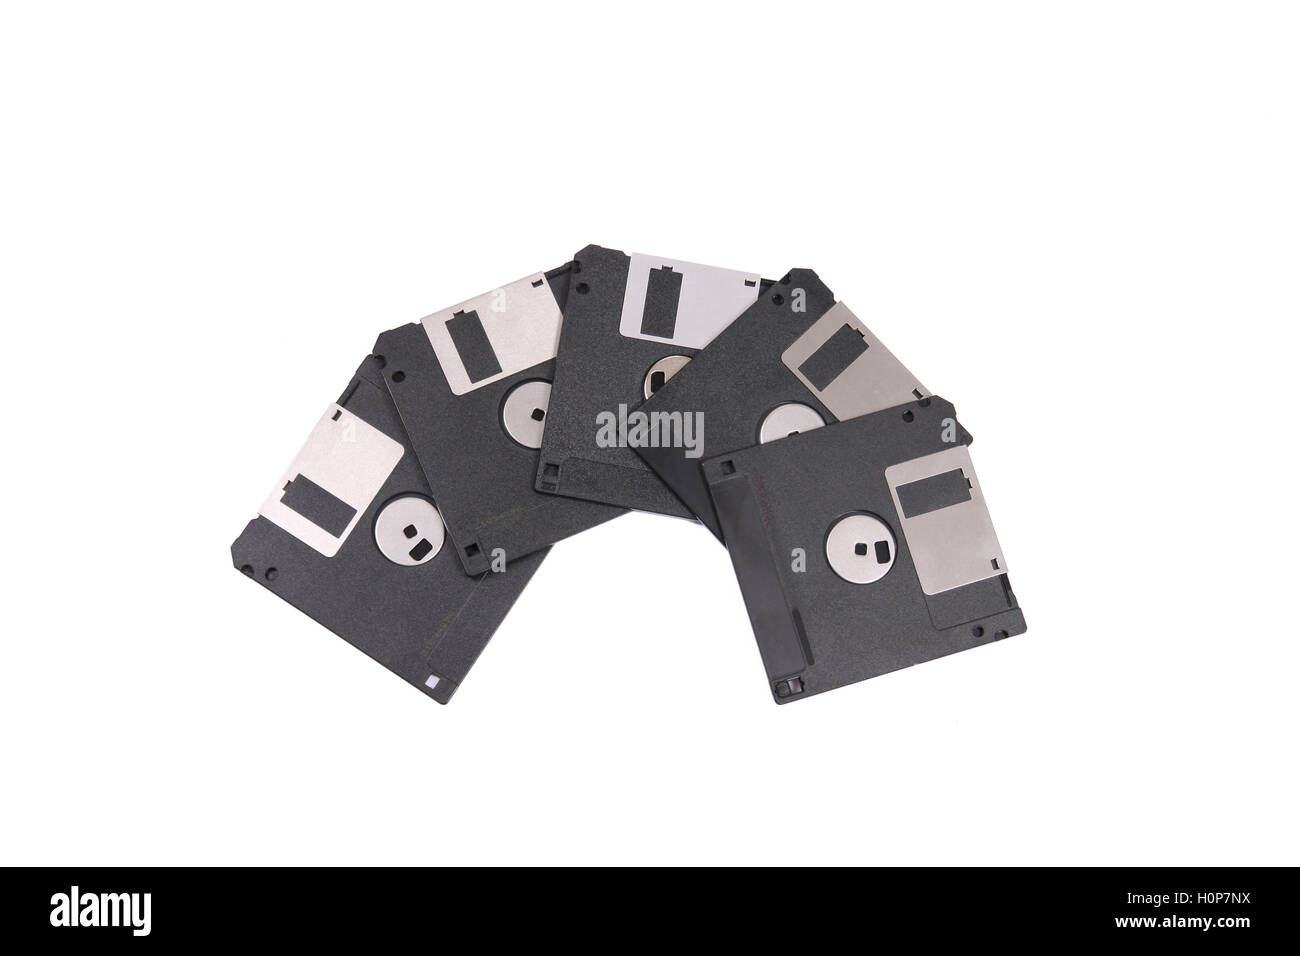 Floppy disks on white background isolated Stock Photo